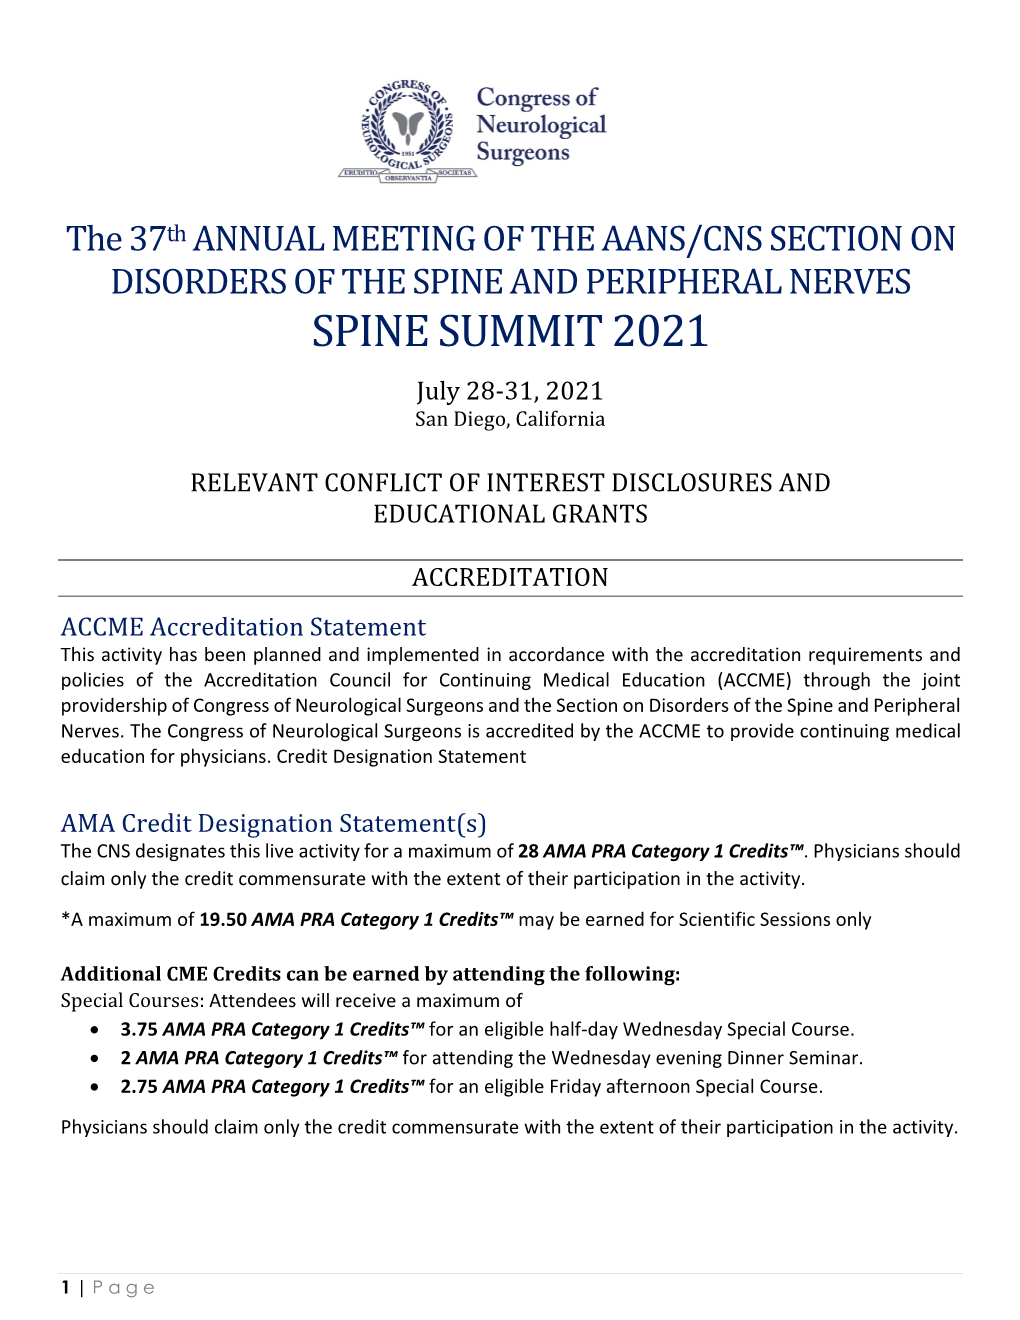 View Spine Summit 2021 Disclosures